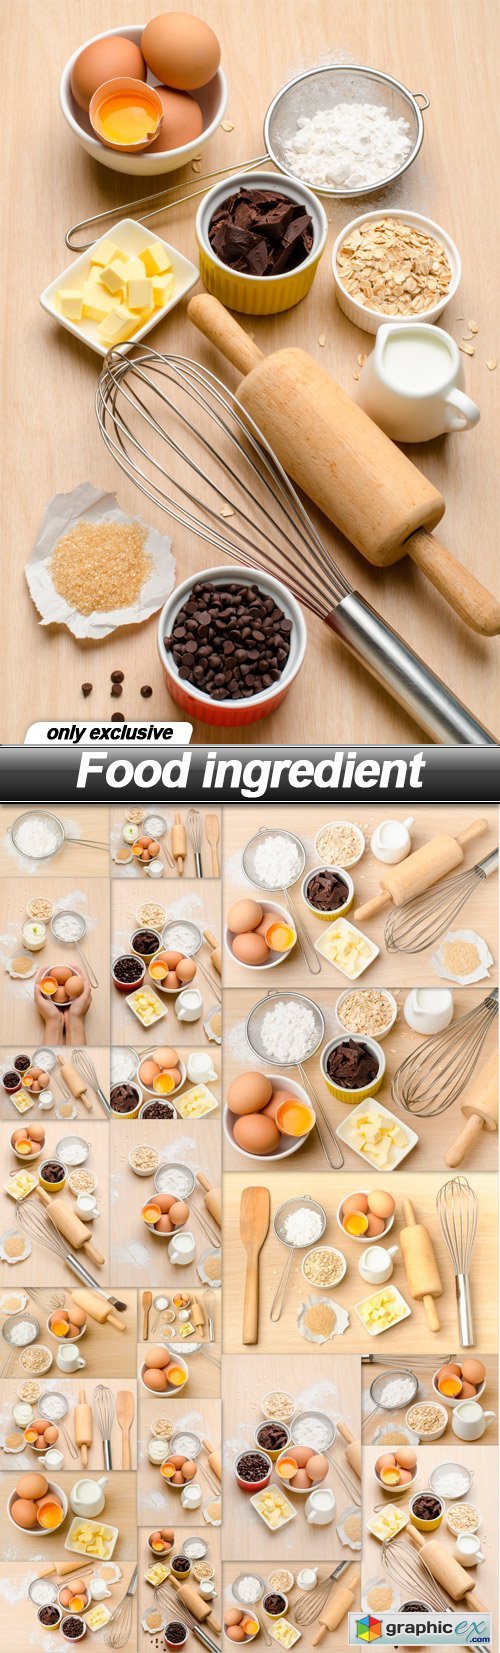 Food ingredient - 23 UHQ JPEG